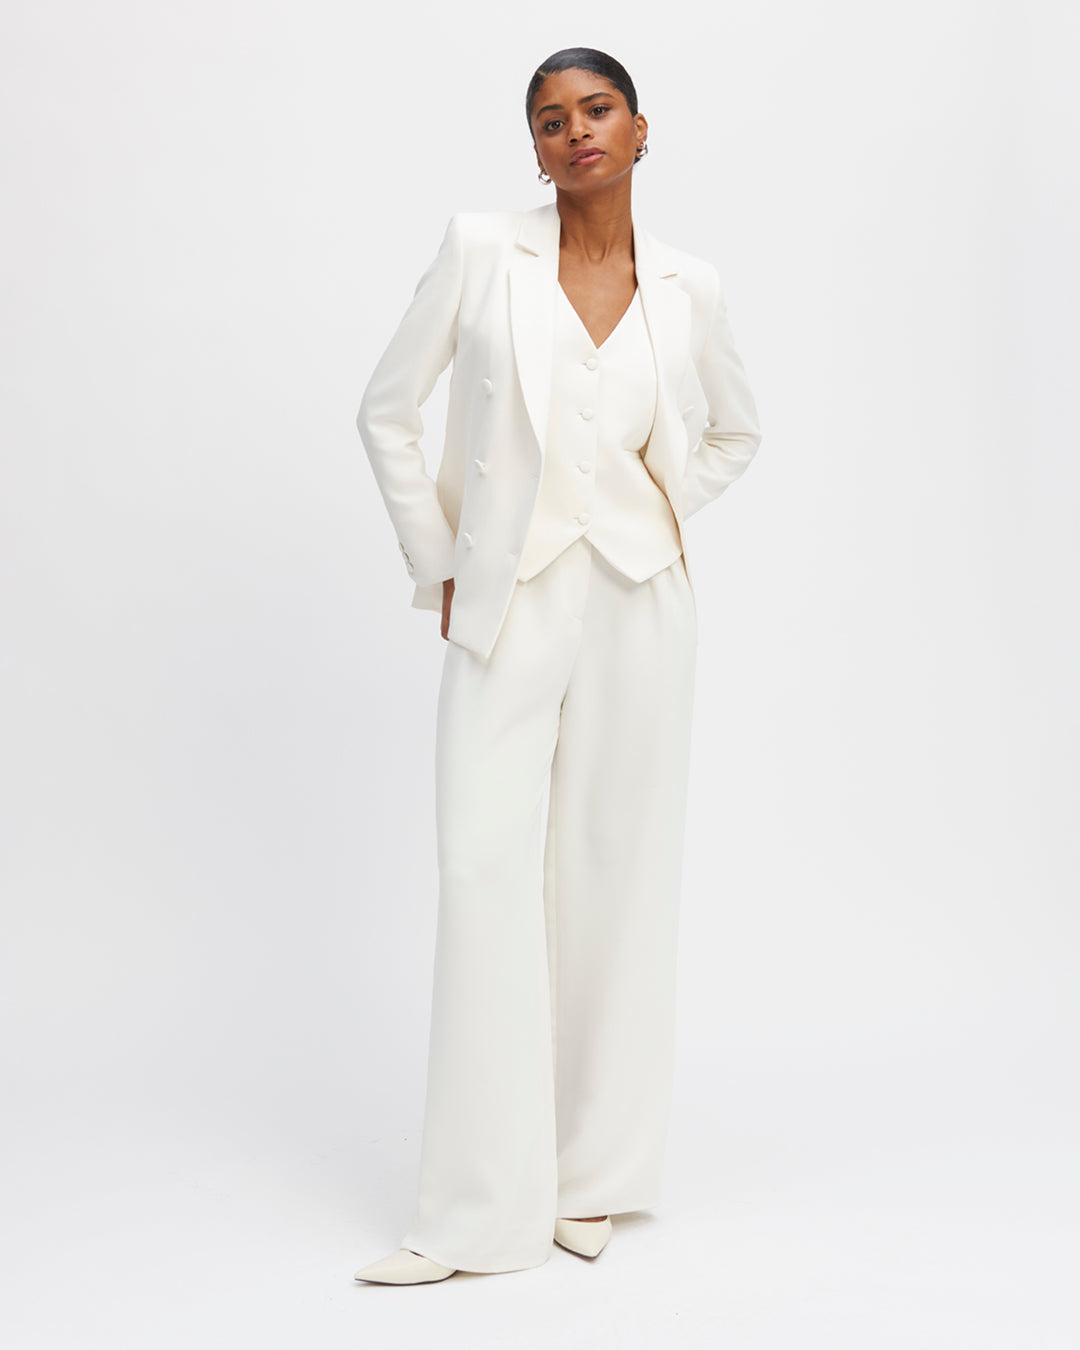 Trousers-white-palazzo-high-waist-details-double-pleated-low-leg-XXL-draws-the-waist-and-legs-belt-buckle-detachable-belt-tone-on-tone-17H10-tailors-for-women-paris-